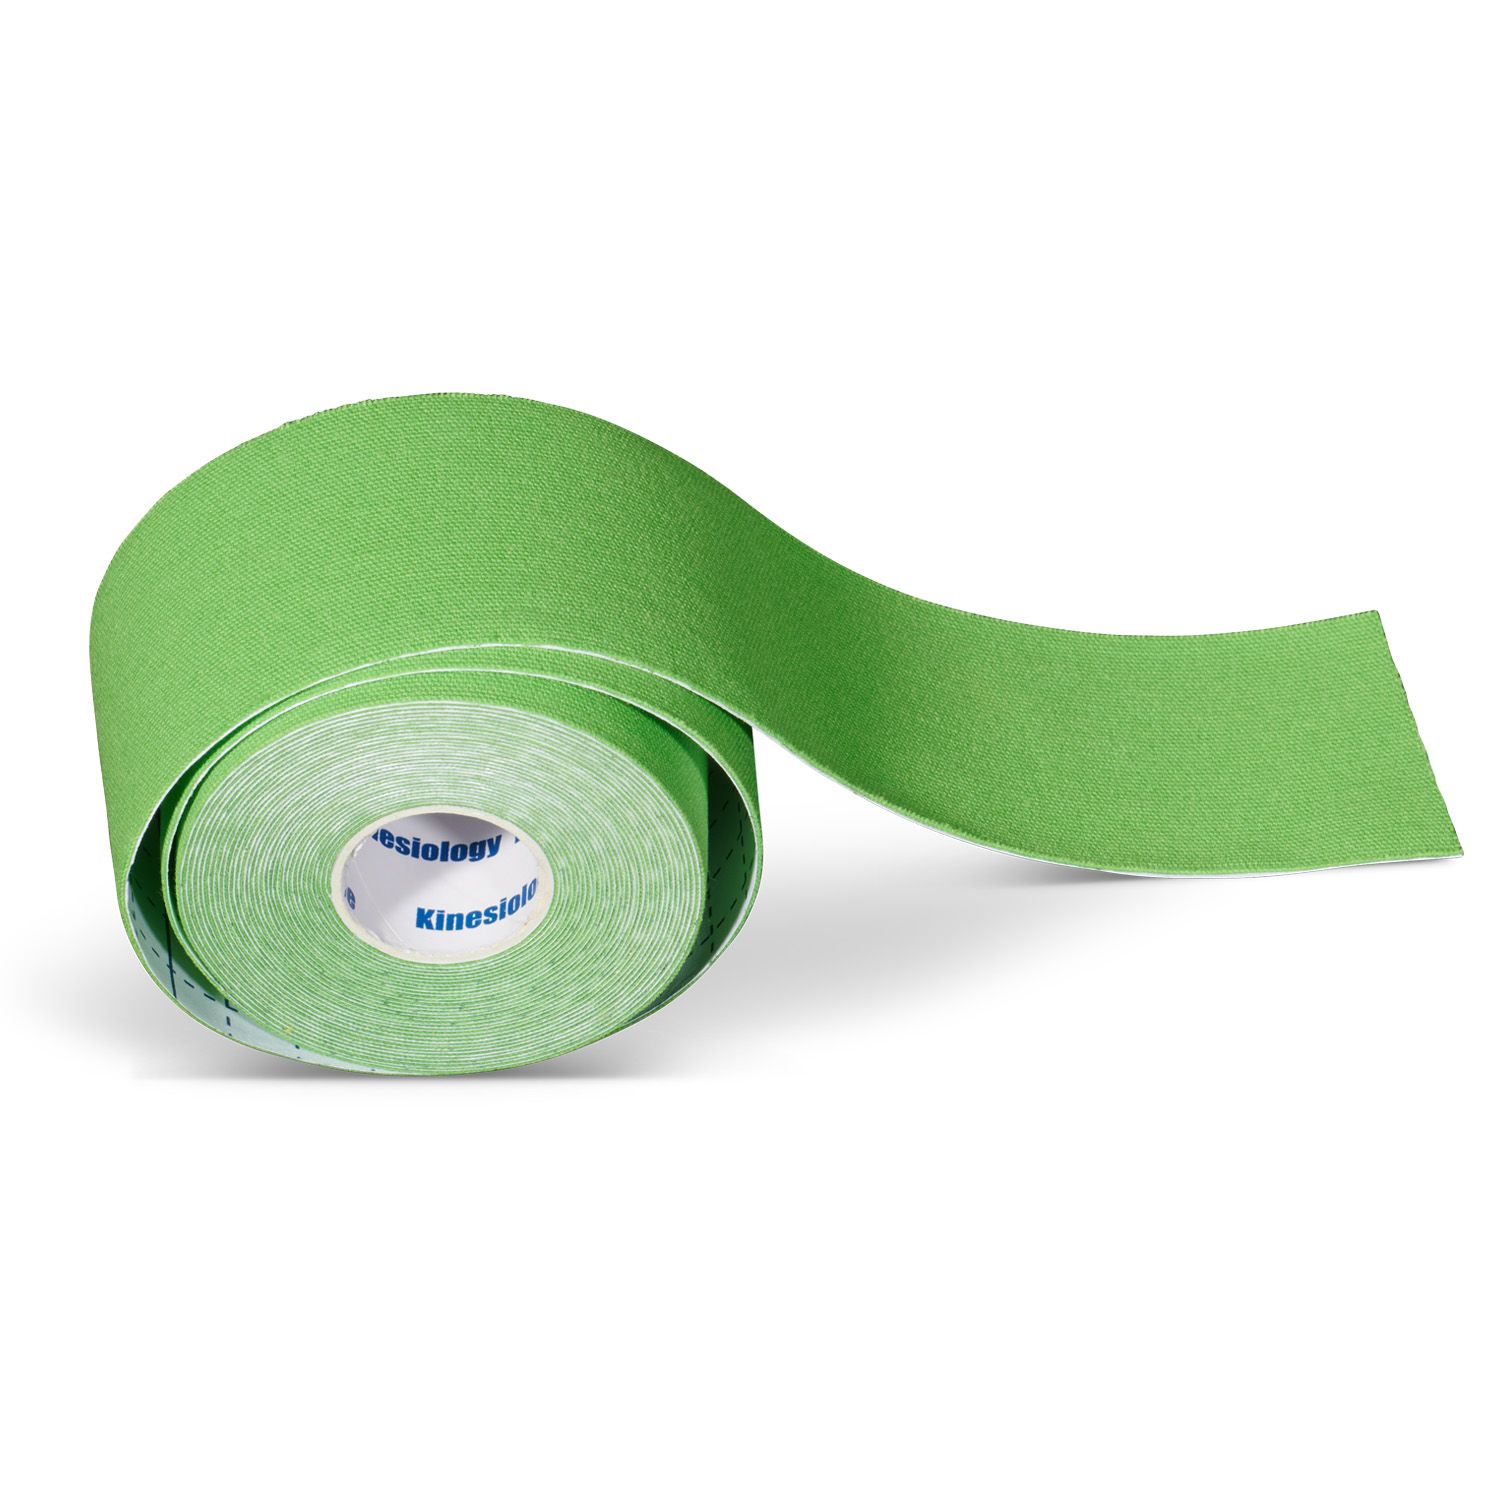 Kinesiology tape per roll green